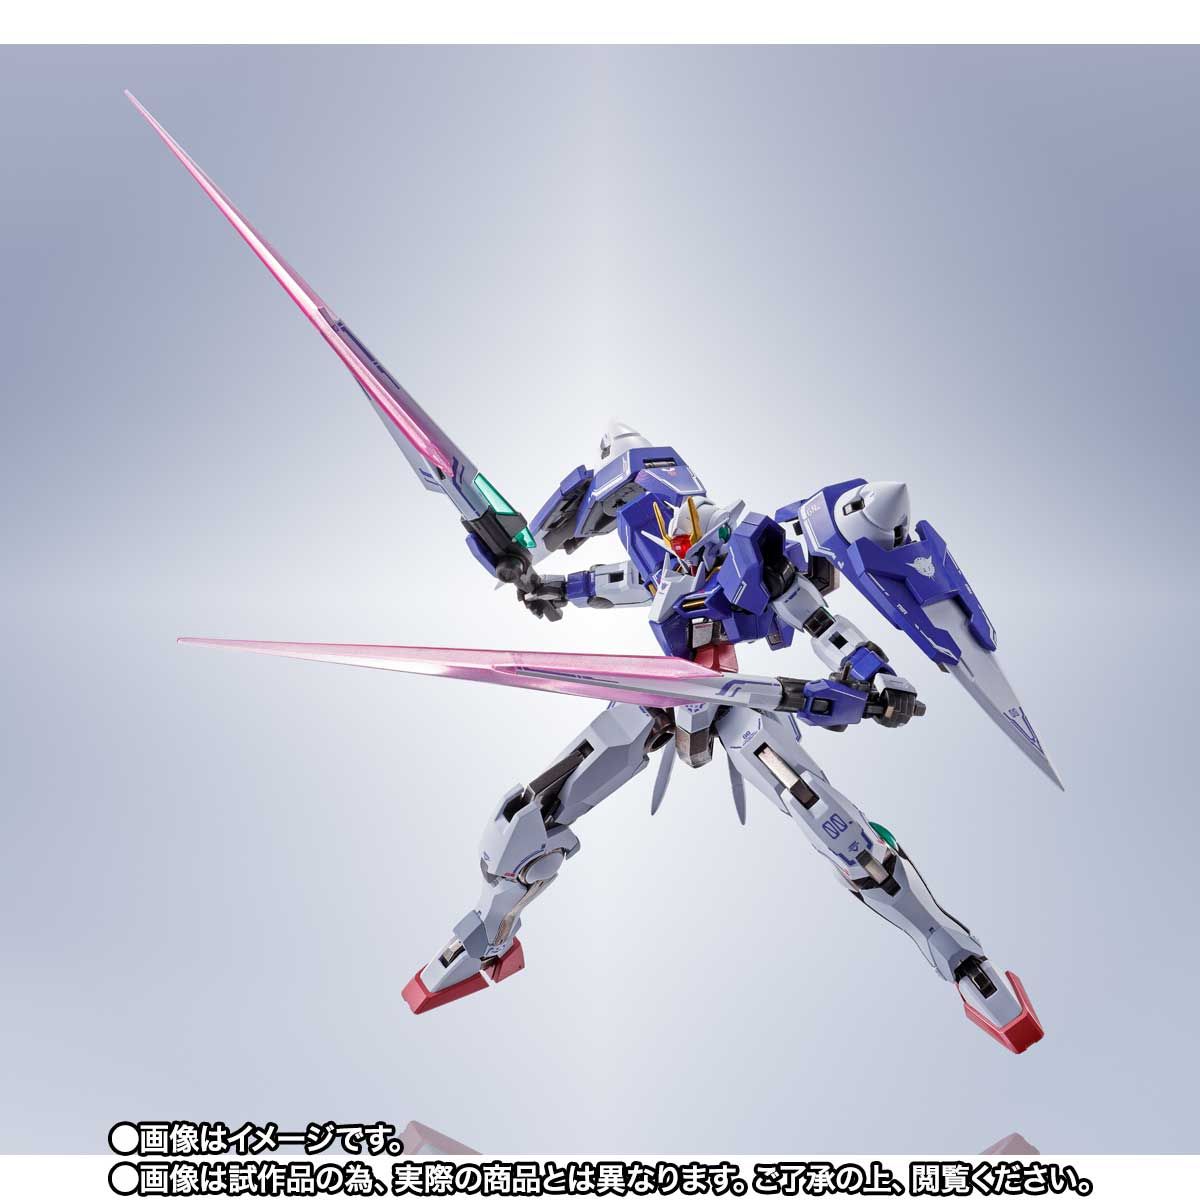 Metal Robot Spirits(Side MS) GNR-010/XN XN Raiser+Seven Sword Parts Set